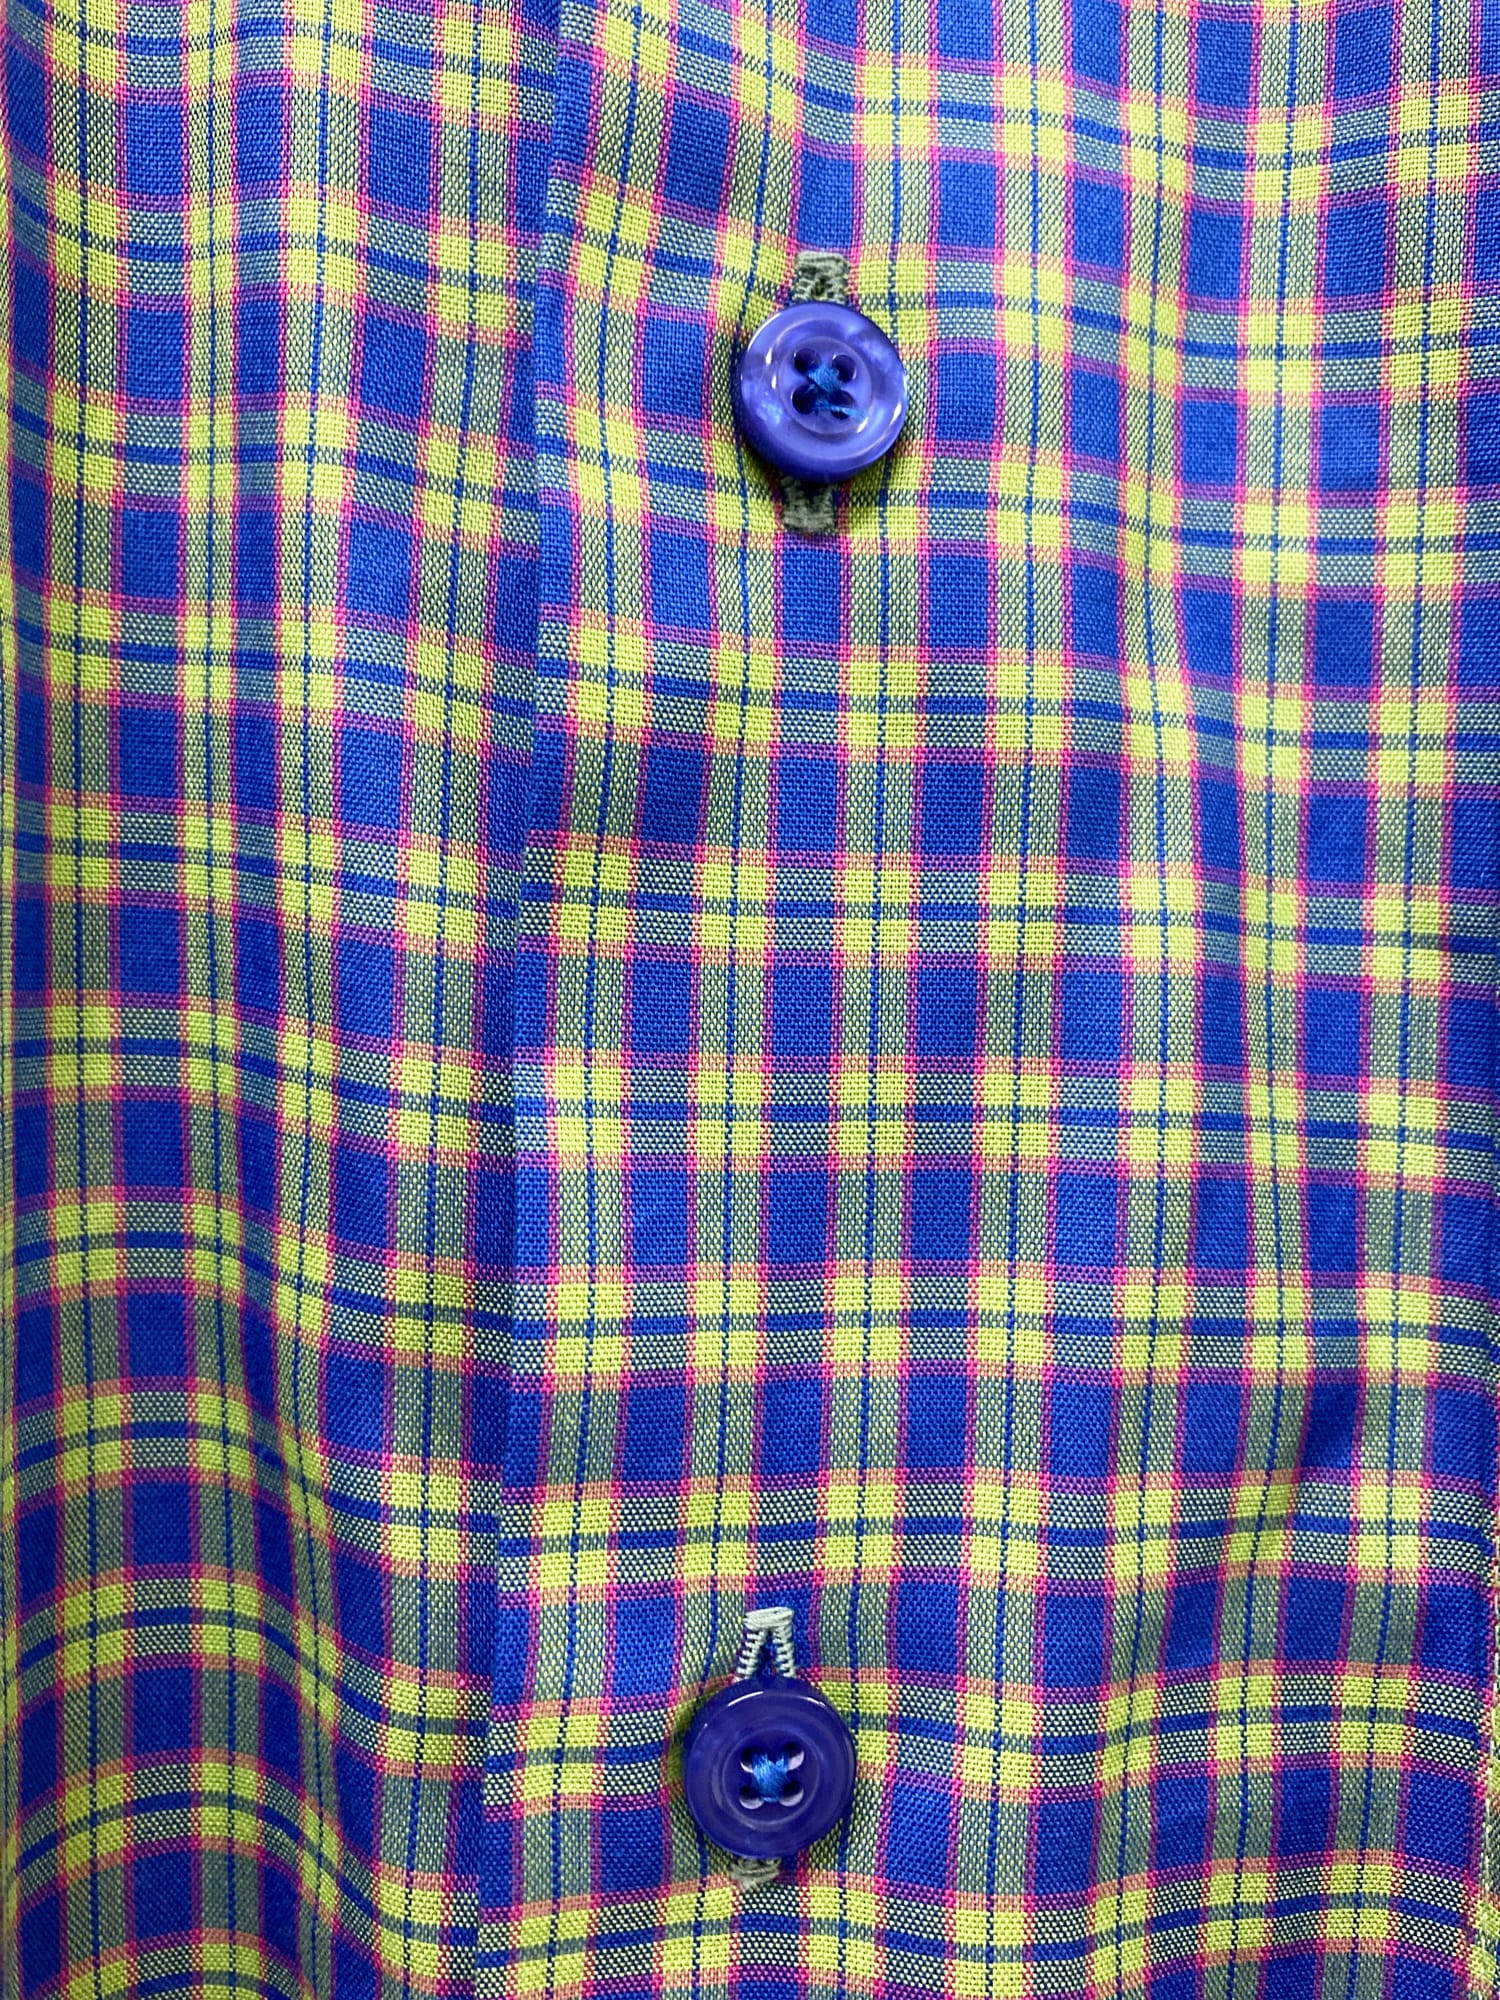 Kenzo Homme 1990s blue green cotton check shirt - size 3 L M